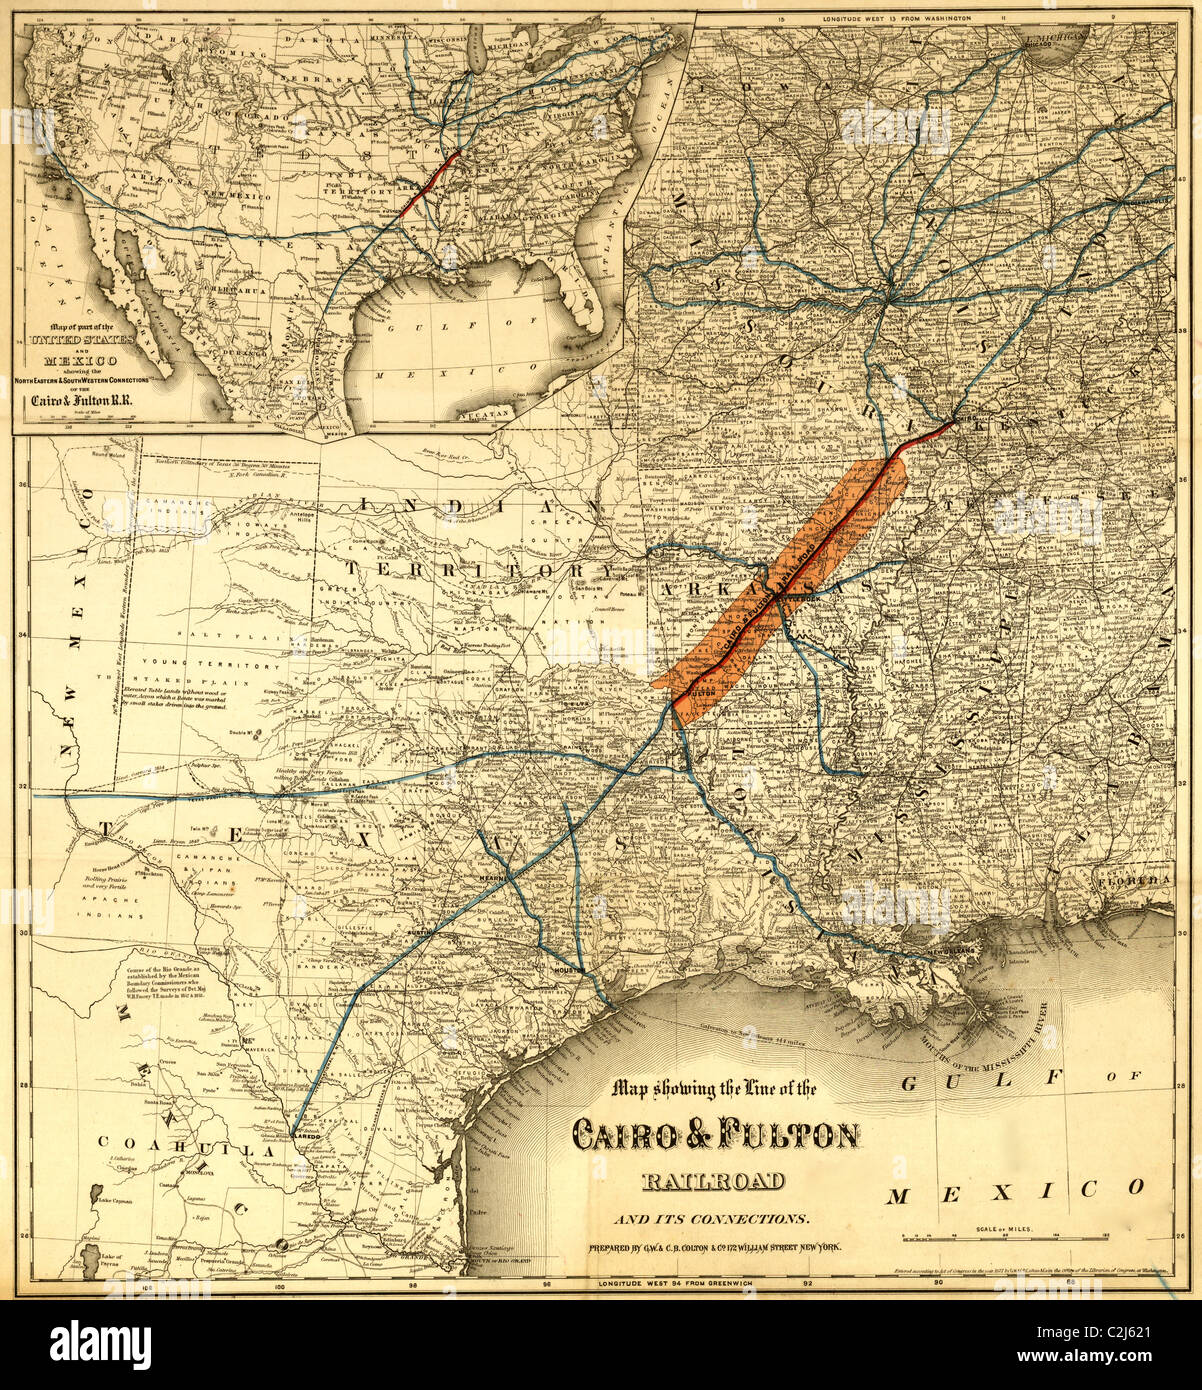 Cairo & Fulton Railroad - 1871 Stockfoto